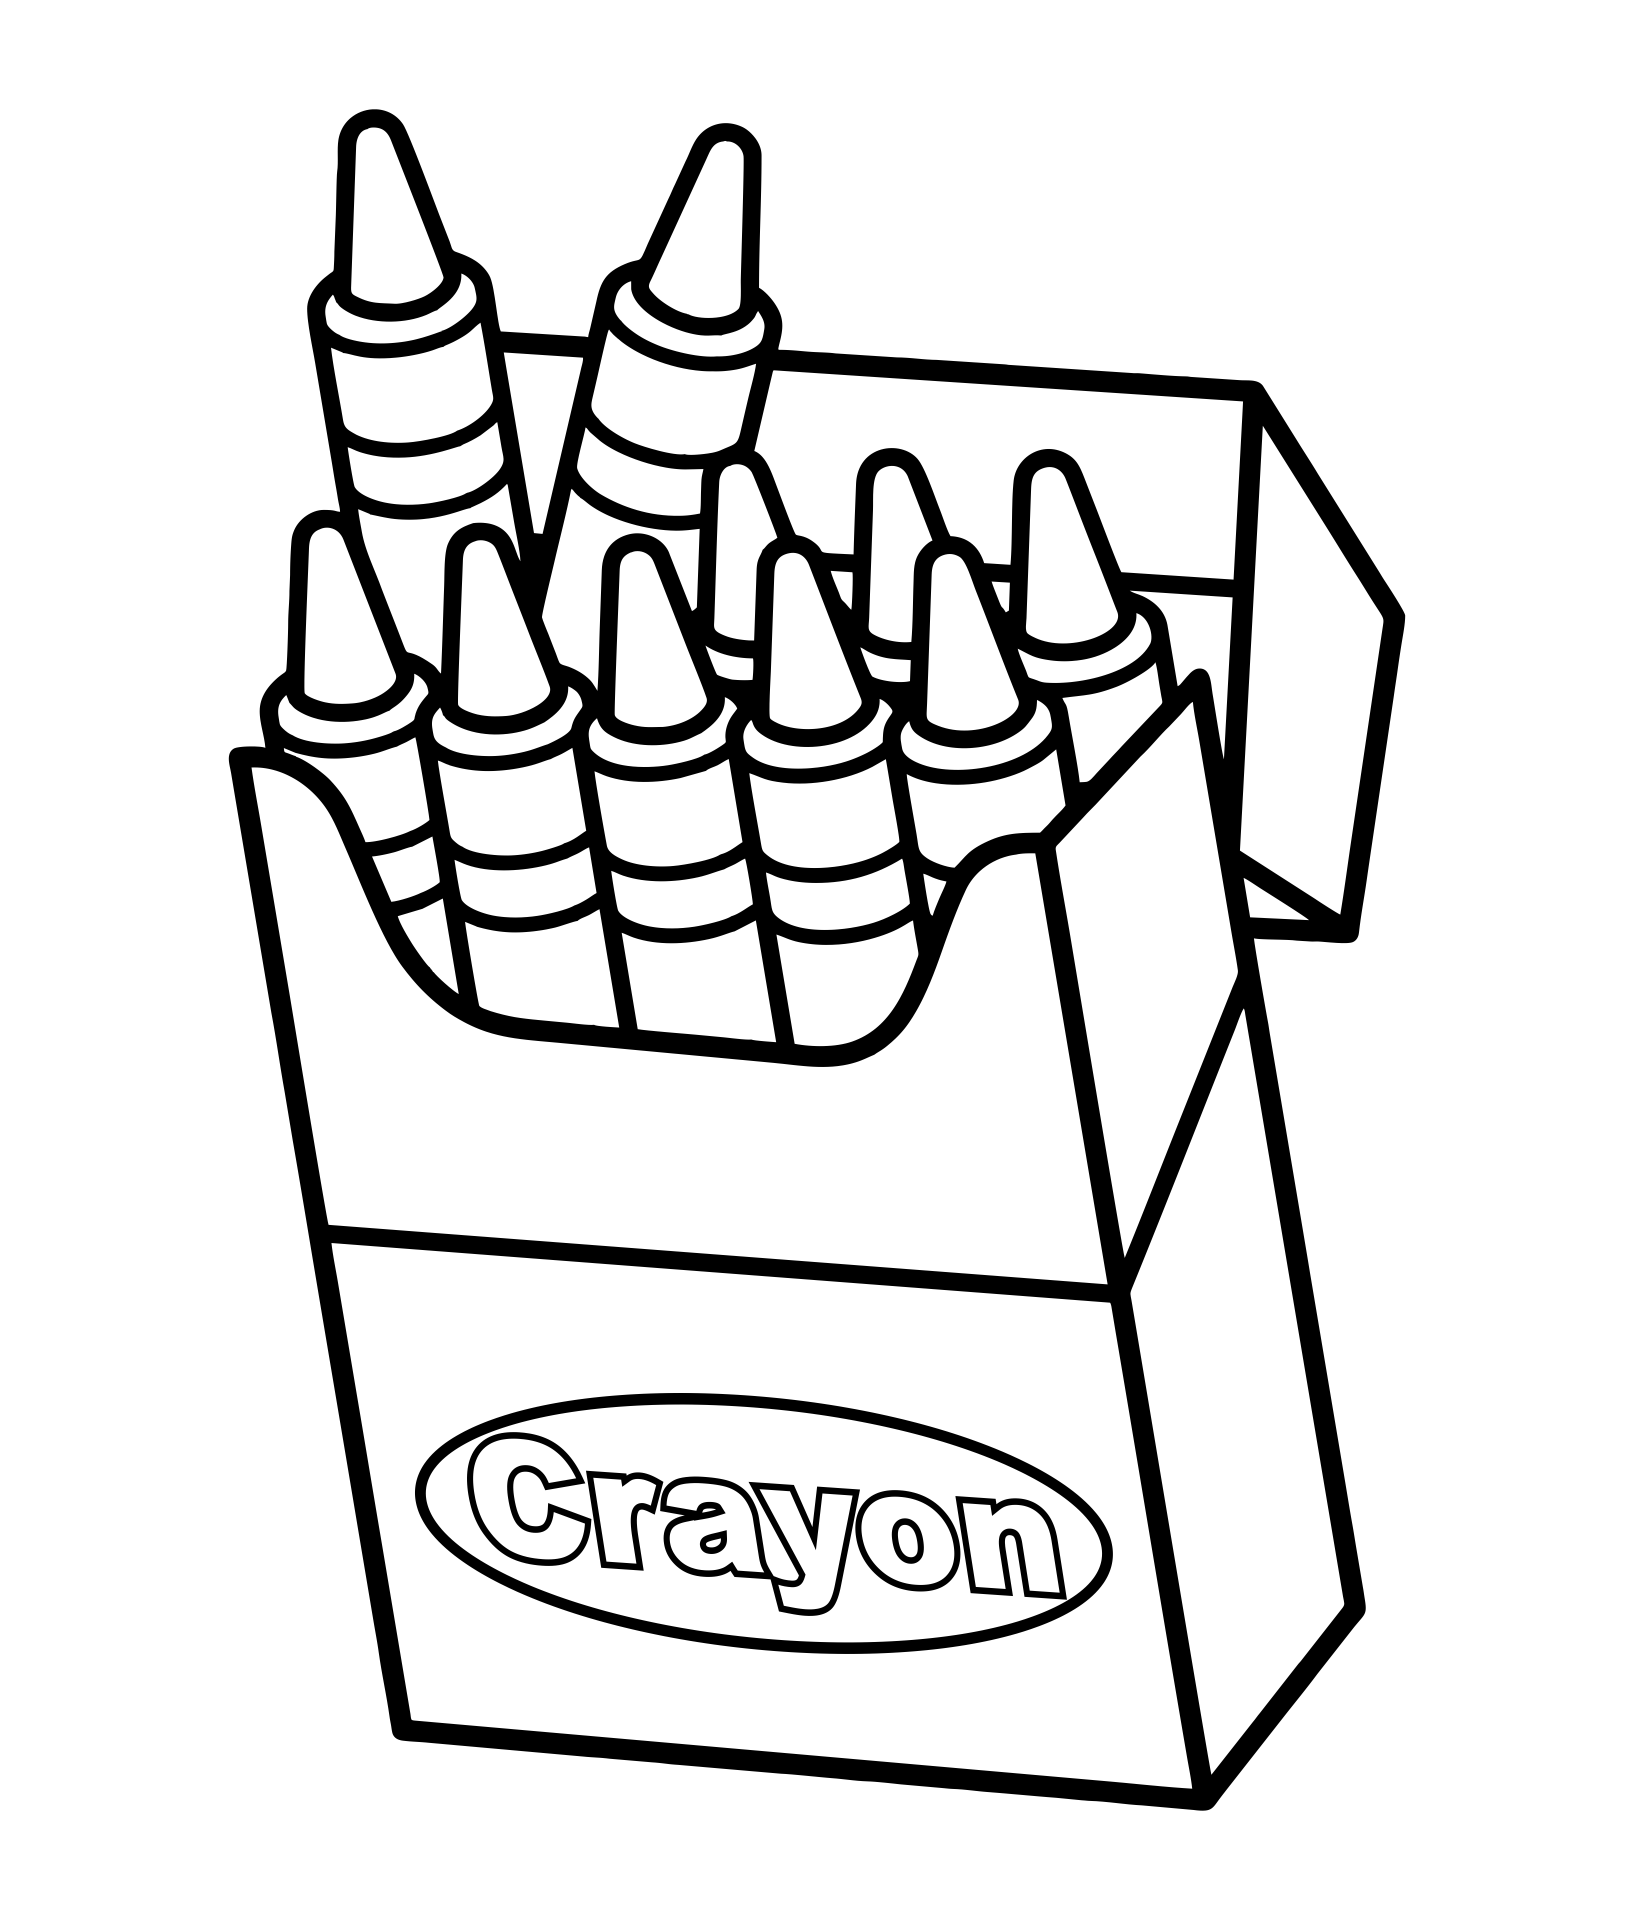 Box Of Crayons Coloring Page